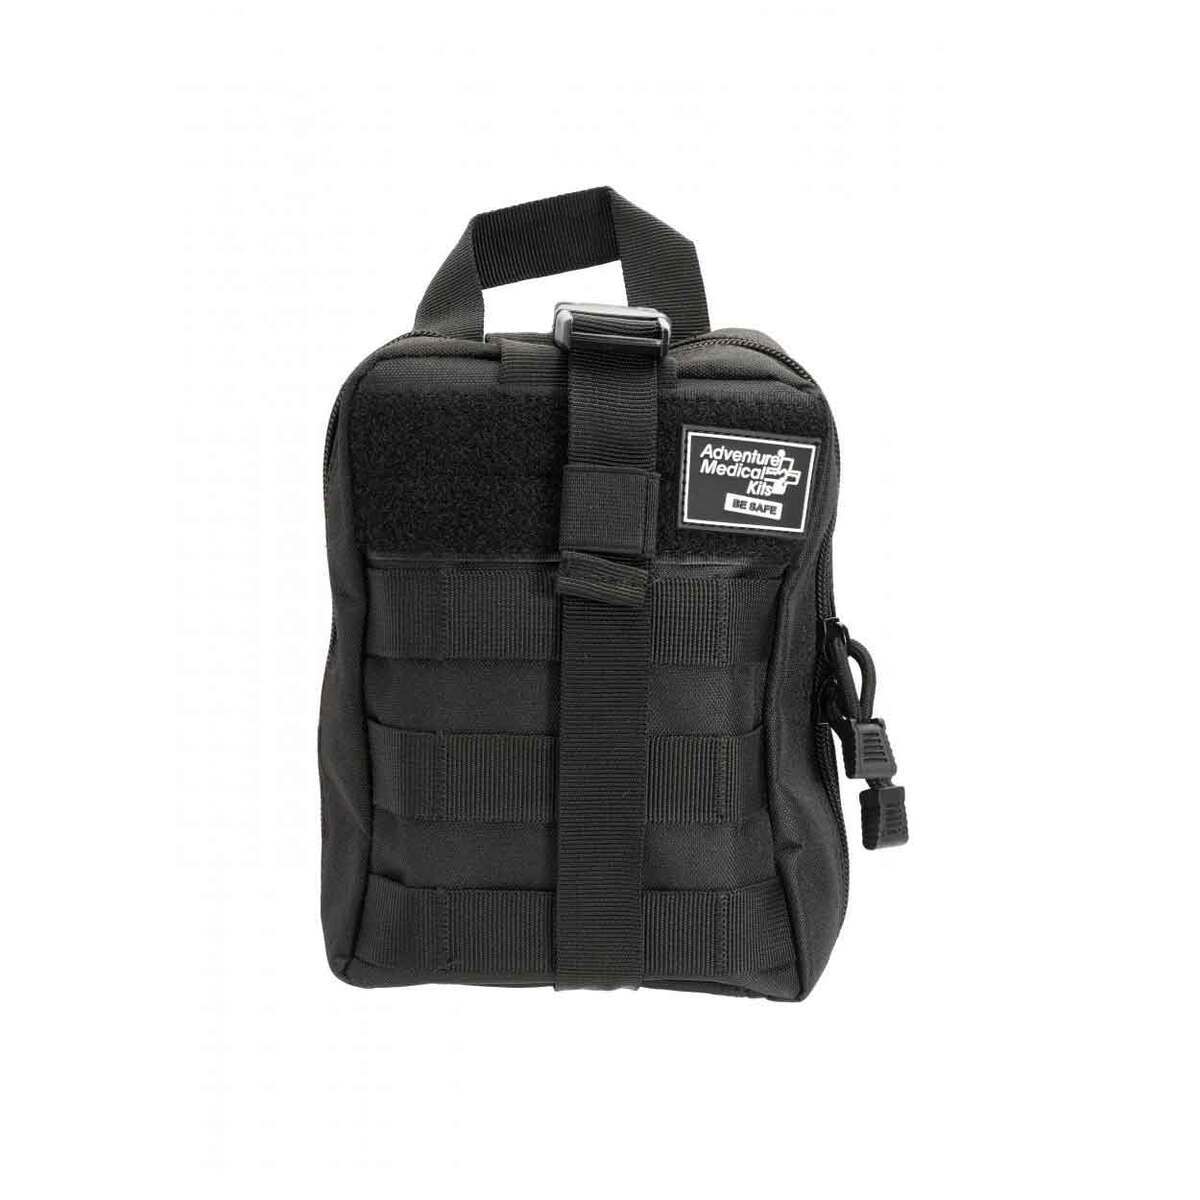 Adventure Medical Kits Molle Bag Trauma Kit 2.0 - Black